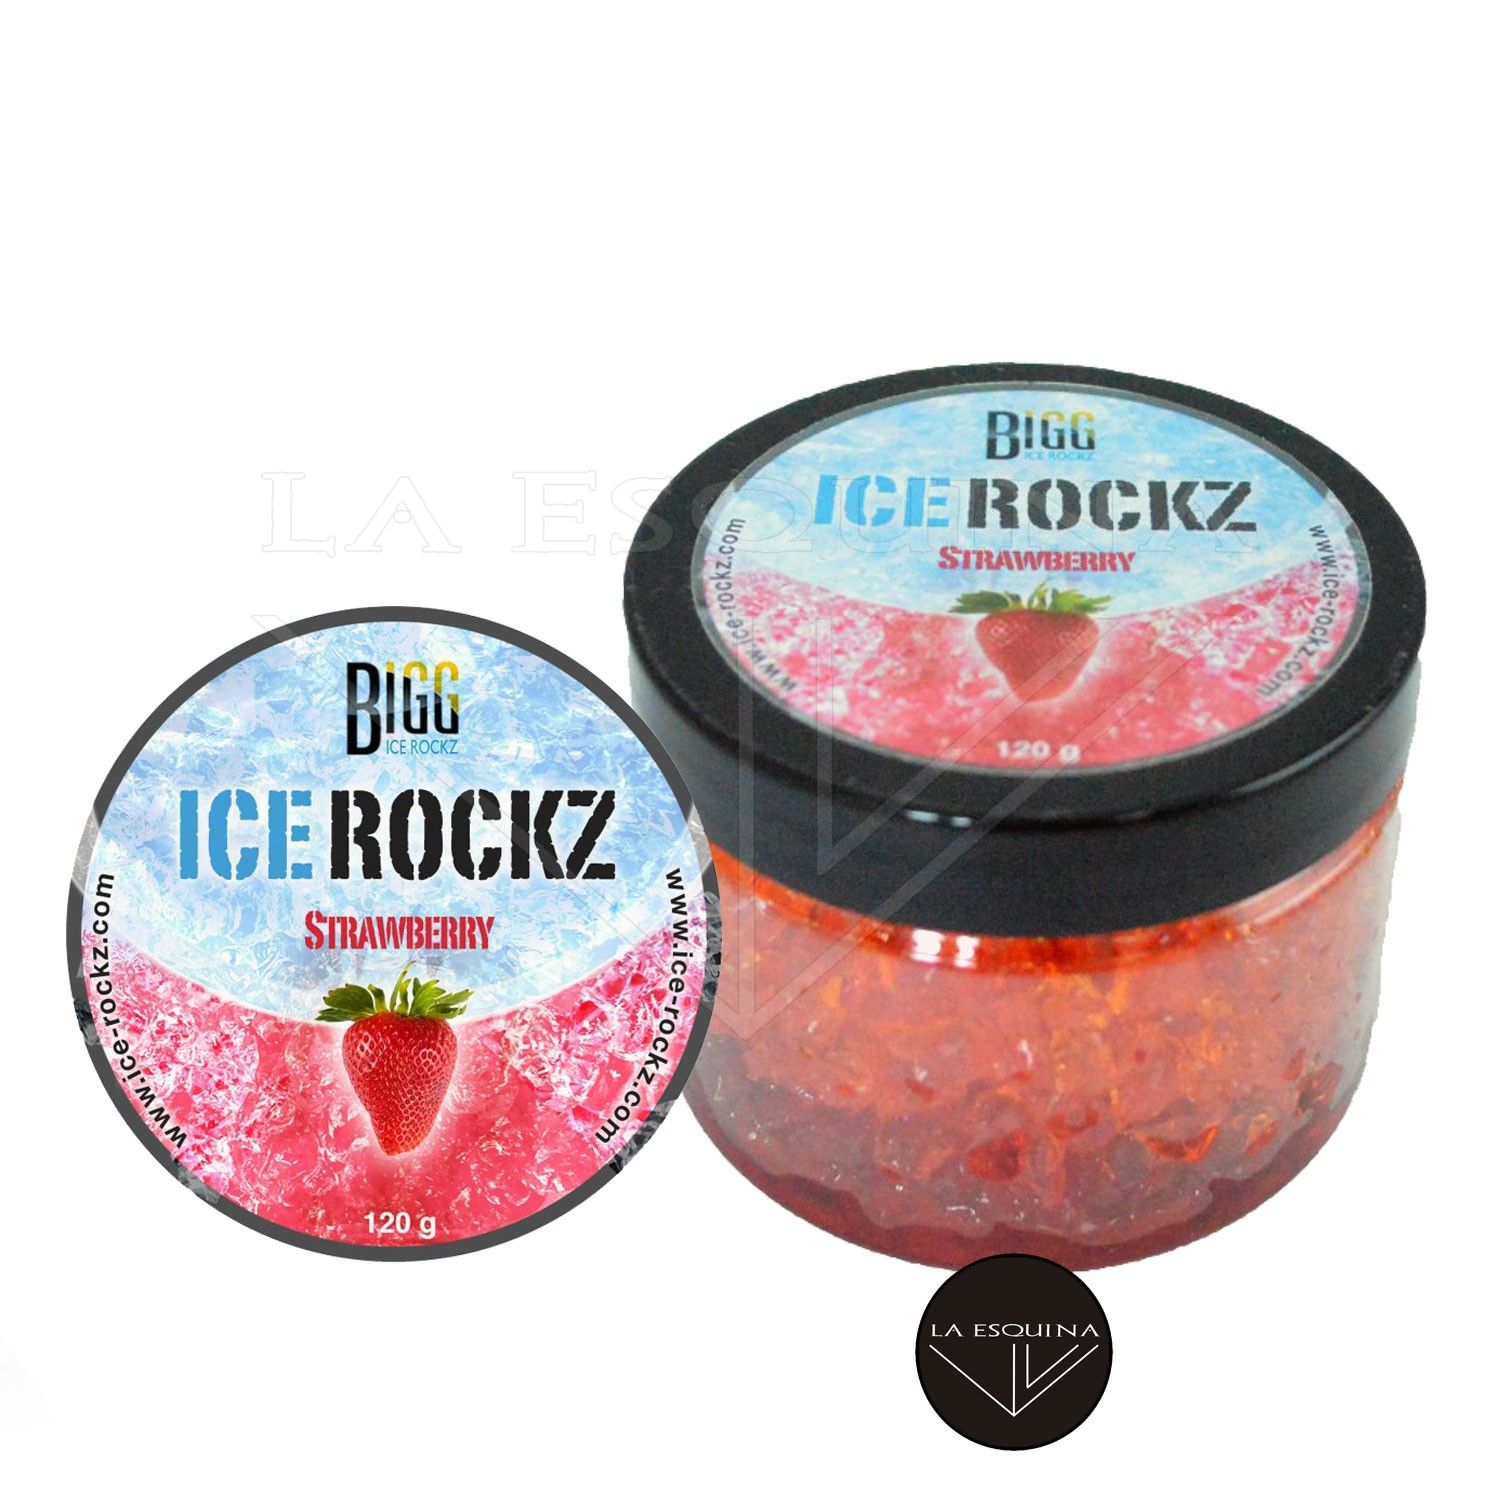 Gel Rock de Cachimba BIGG ICE ROCKZ – 120 g. – Strawberry